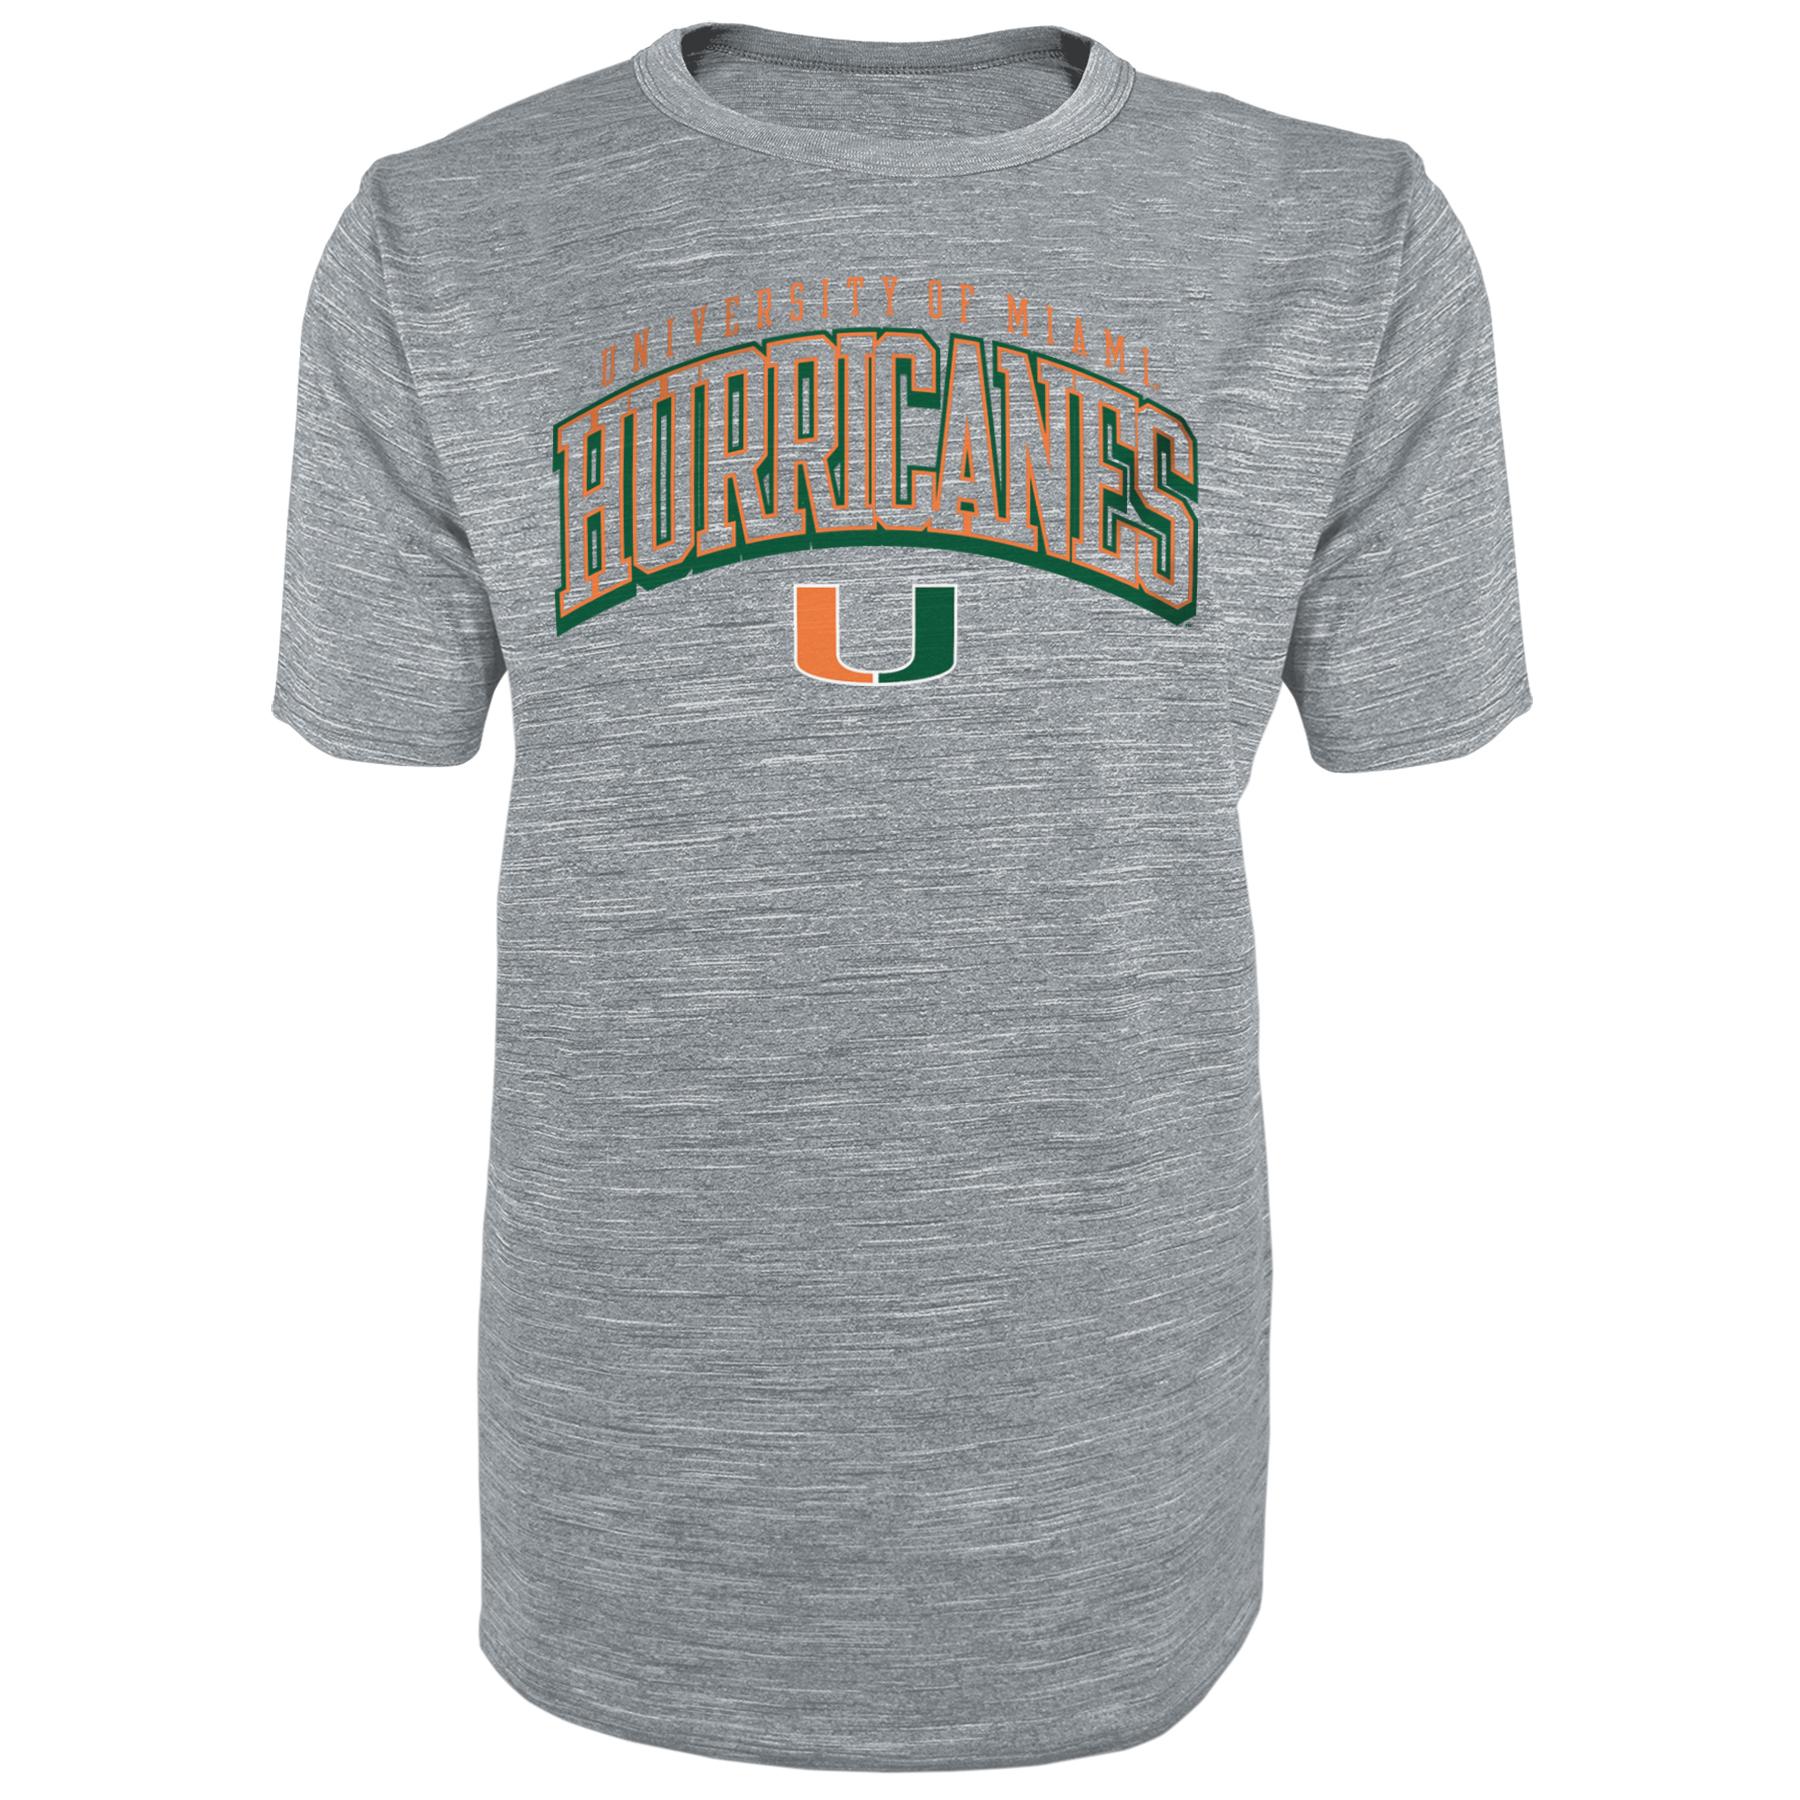 NCAA Men's Big & Tall Graphic T-Shirt - Miami Hurricanes